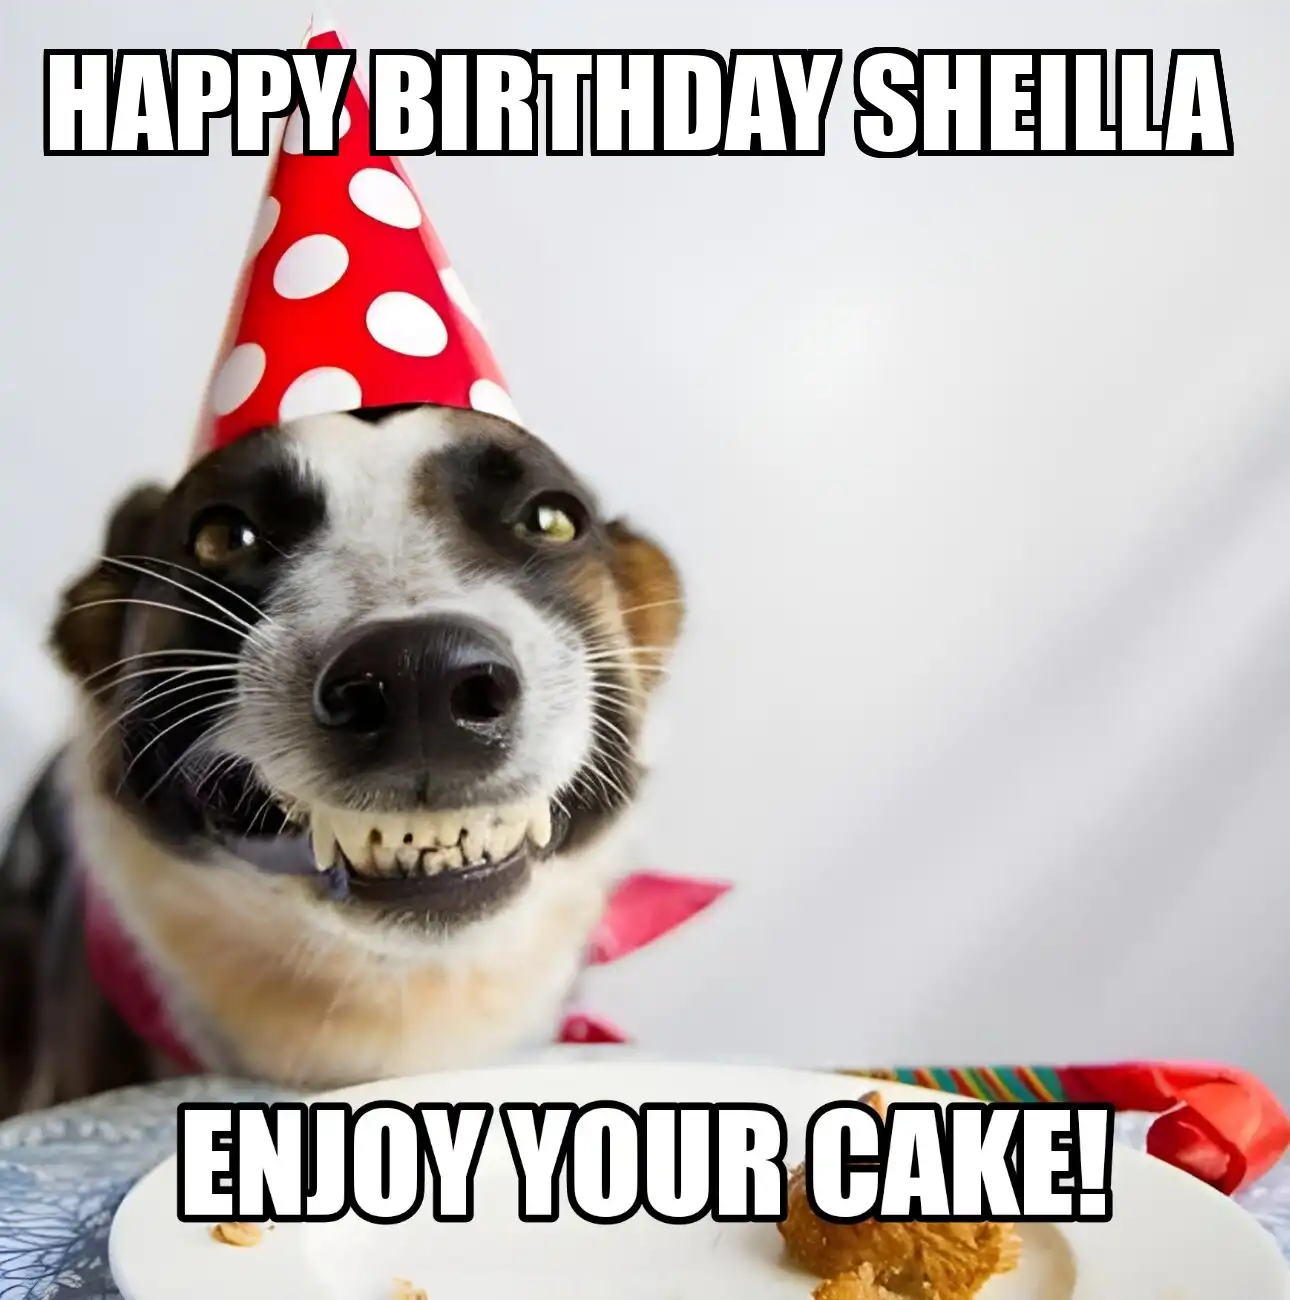 Happy Birthday Sheilla Enjoy Your Cake Dog Meme